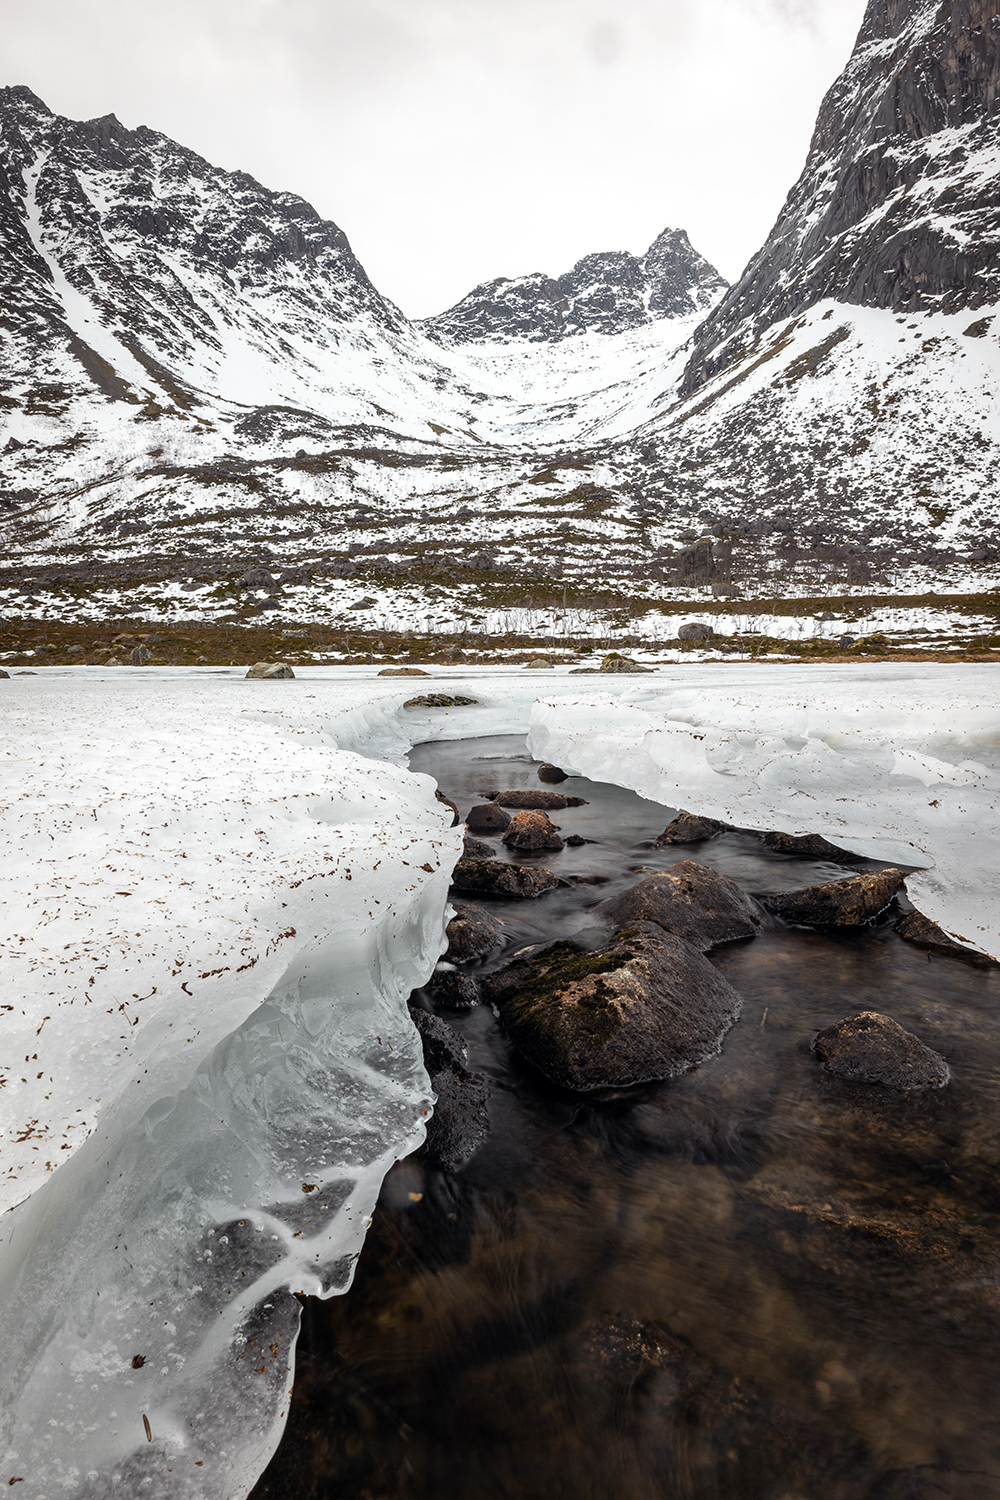 Daniel Spohn im Interview: Winterlandschaften fotografieren